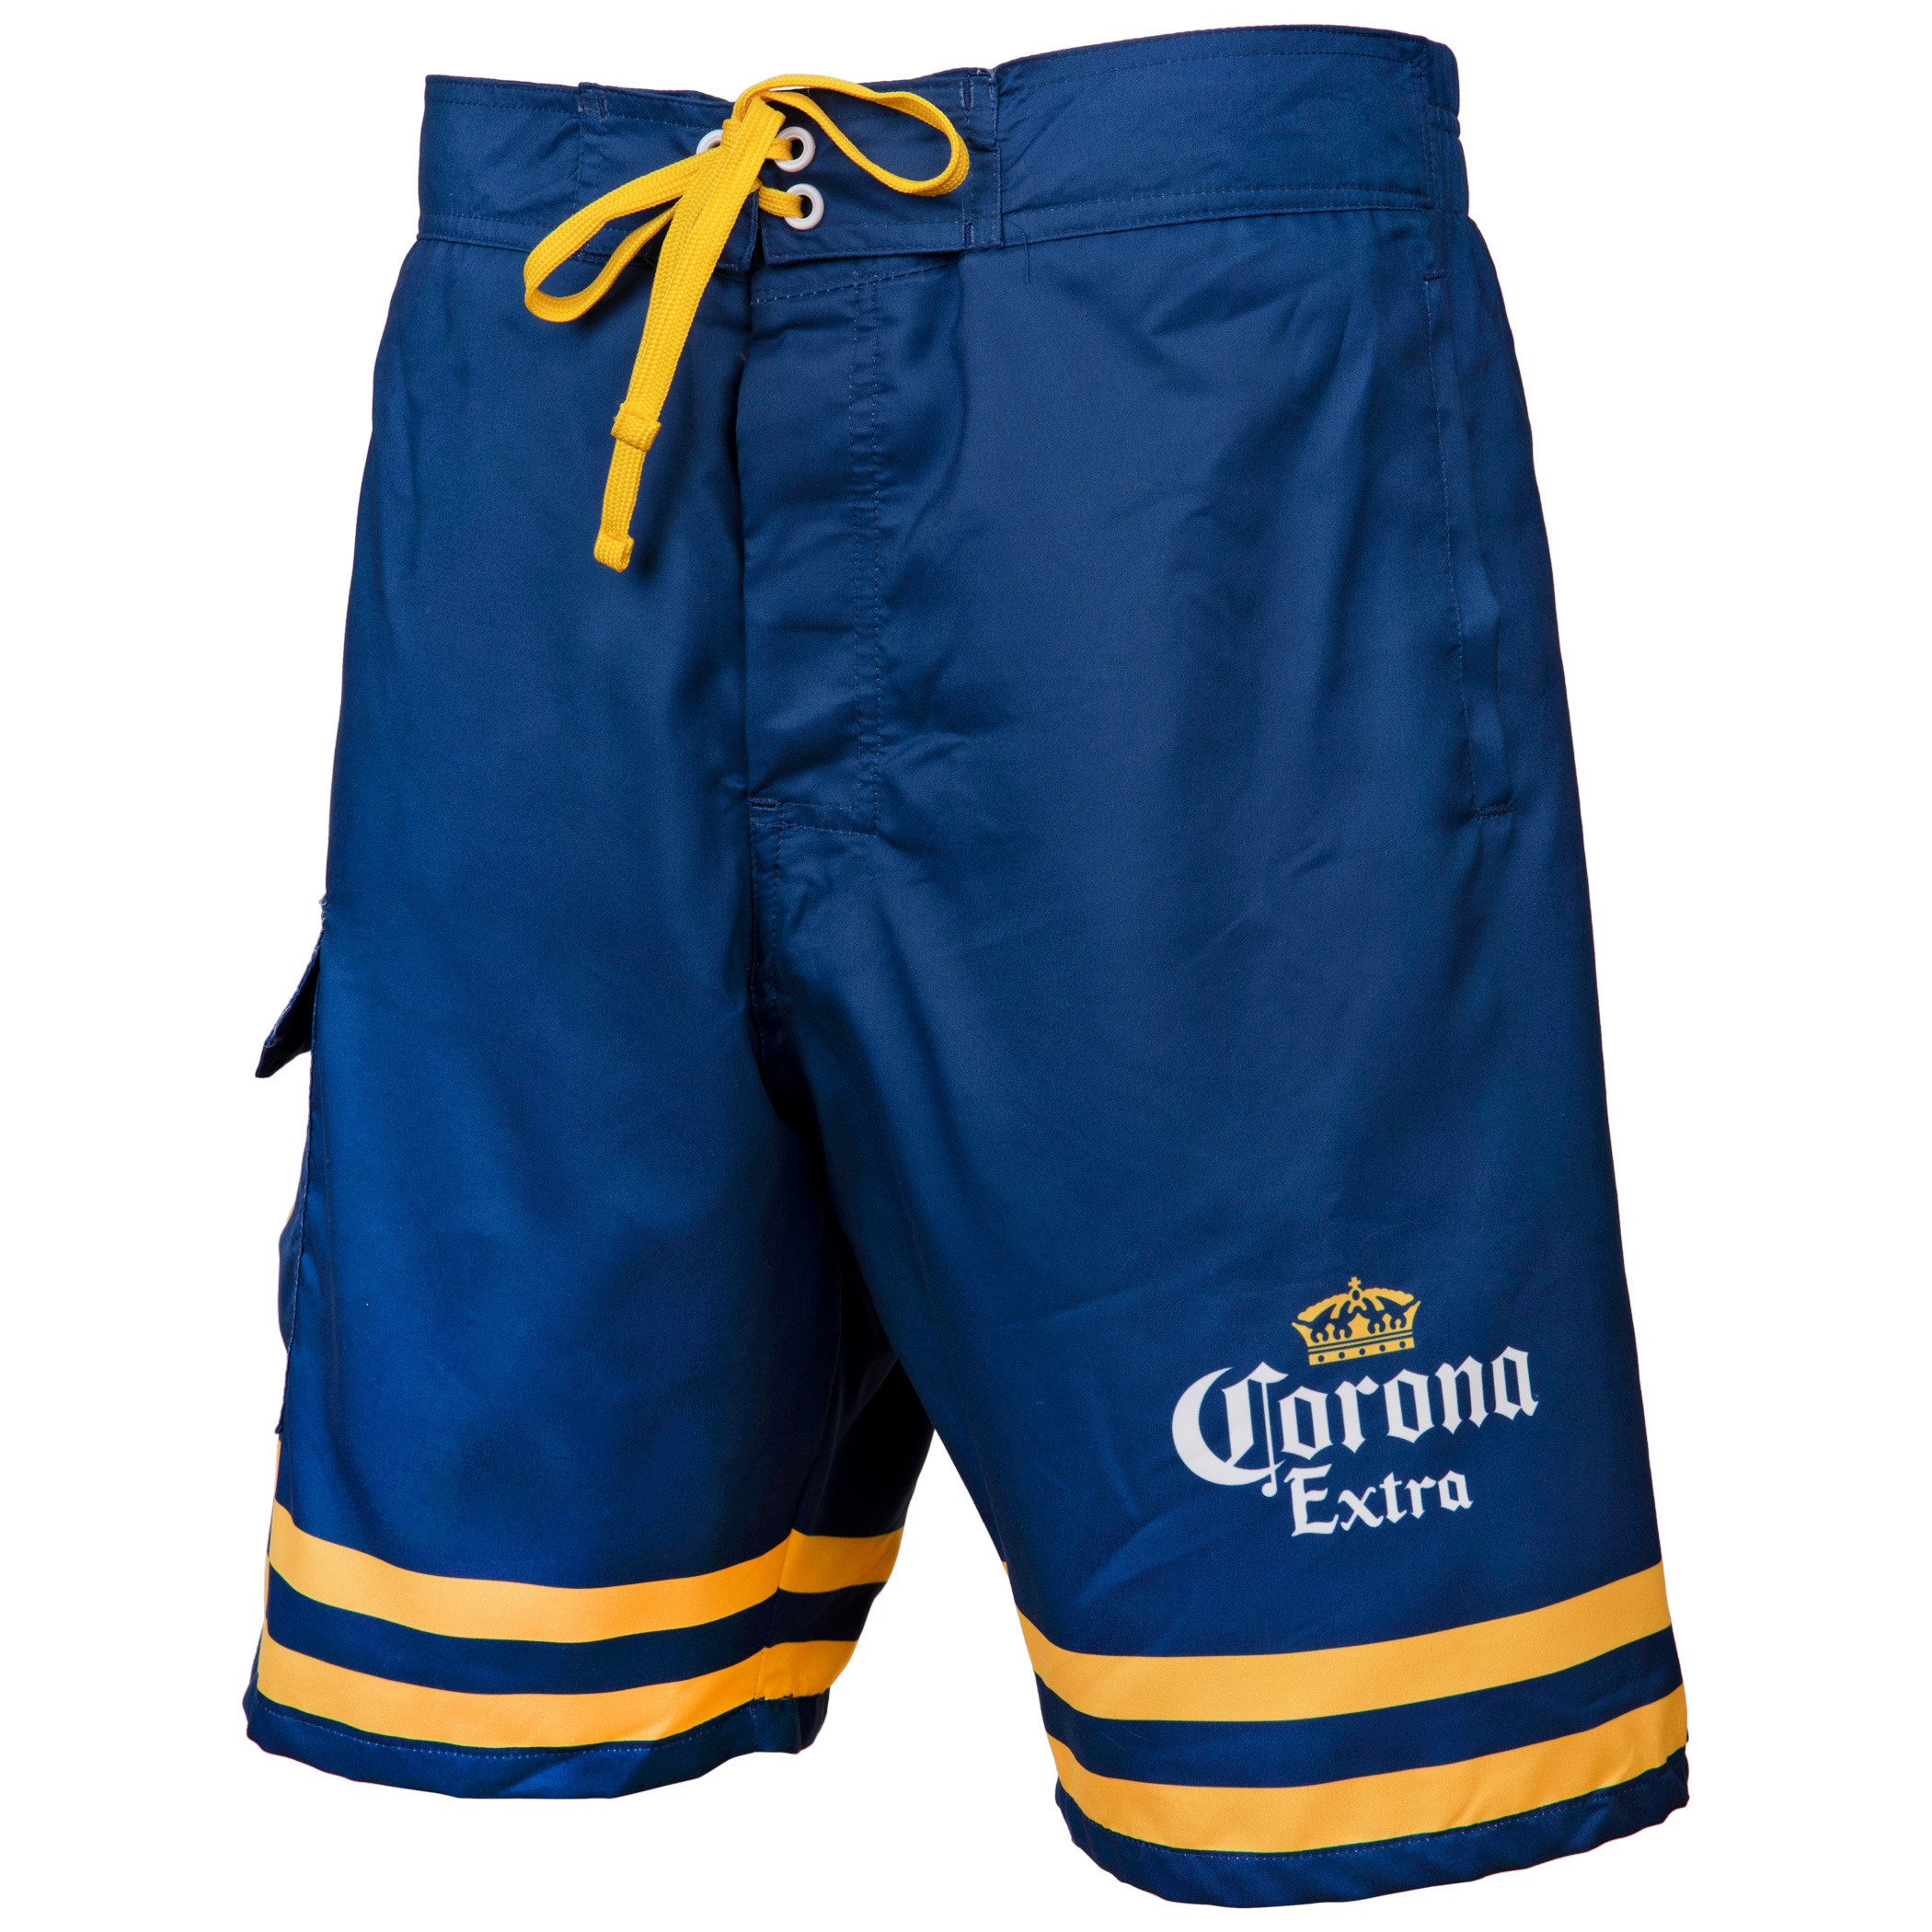 Corona Extra Crossed Bottles Board Shorts